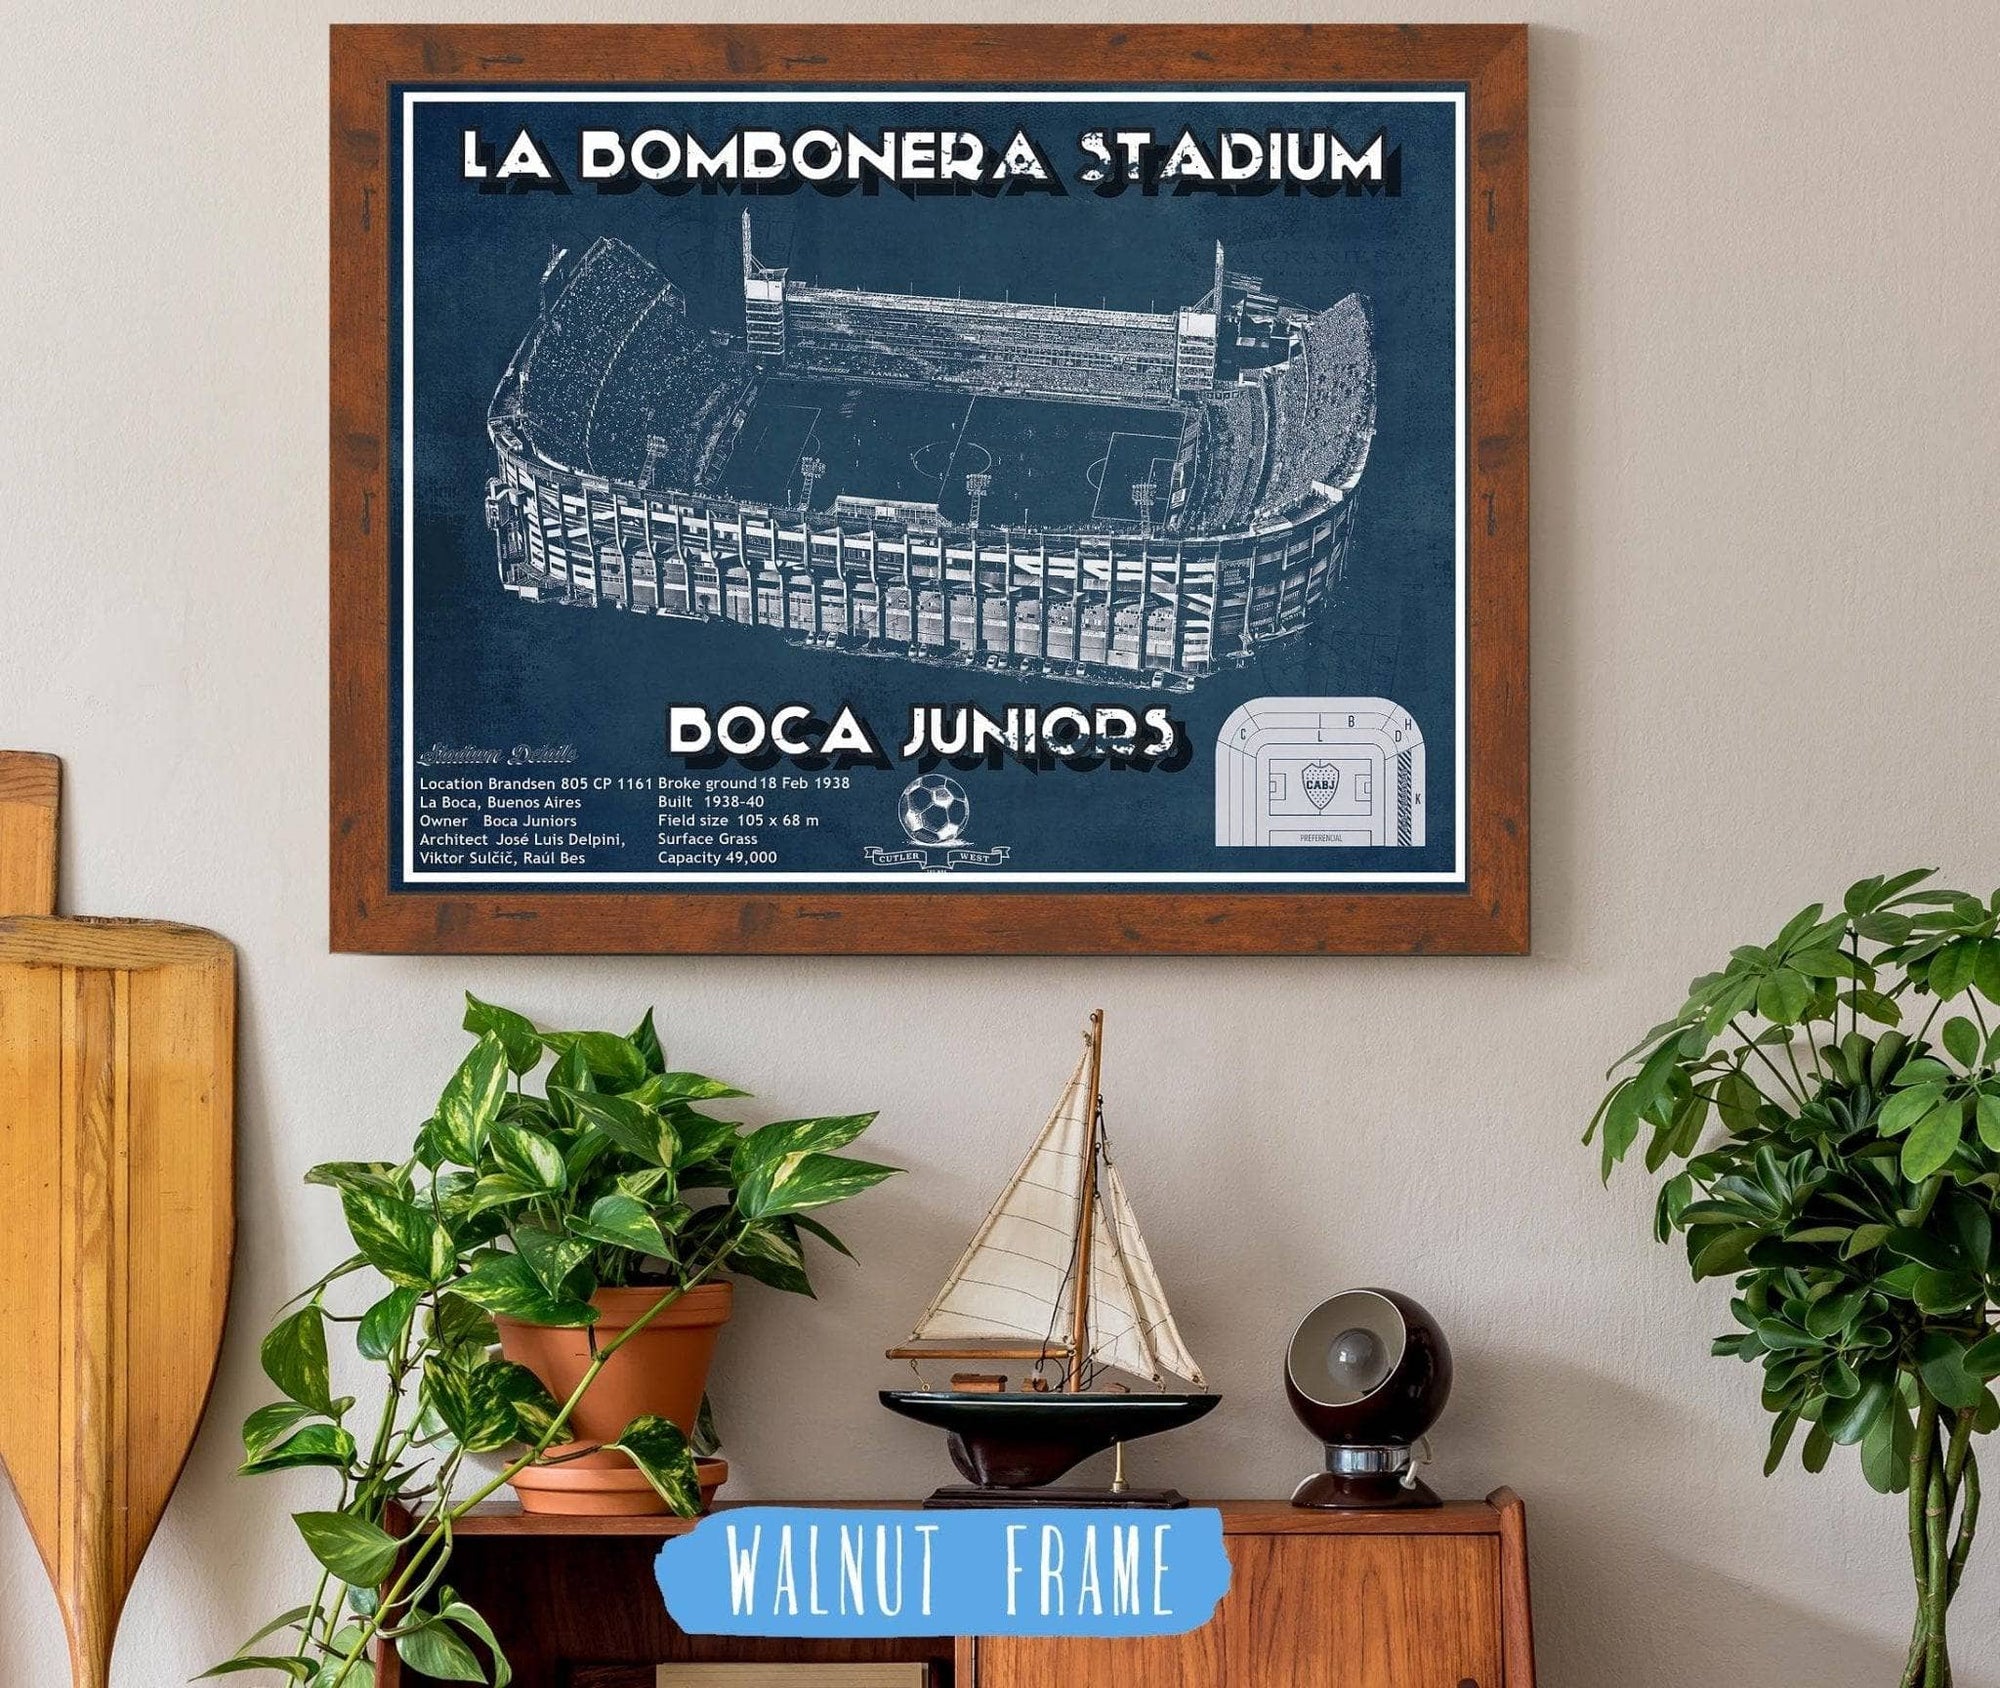 Cutler West Soccer Collection 14" x 11" / Walnut Frame Boca Juniors F.C La Bombonera Stadium Soccer Print 2 734227953-TOP